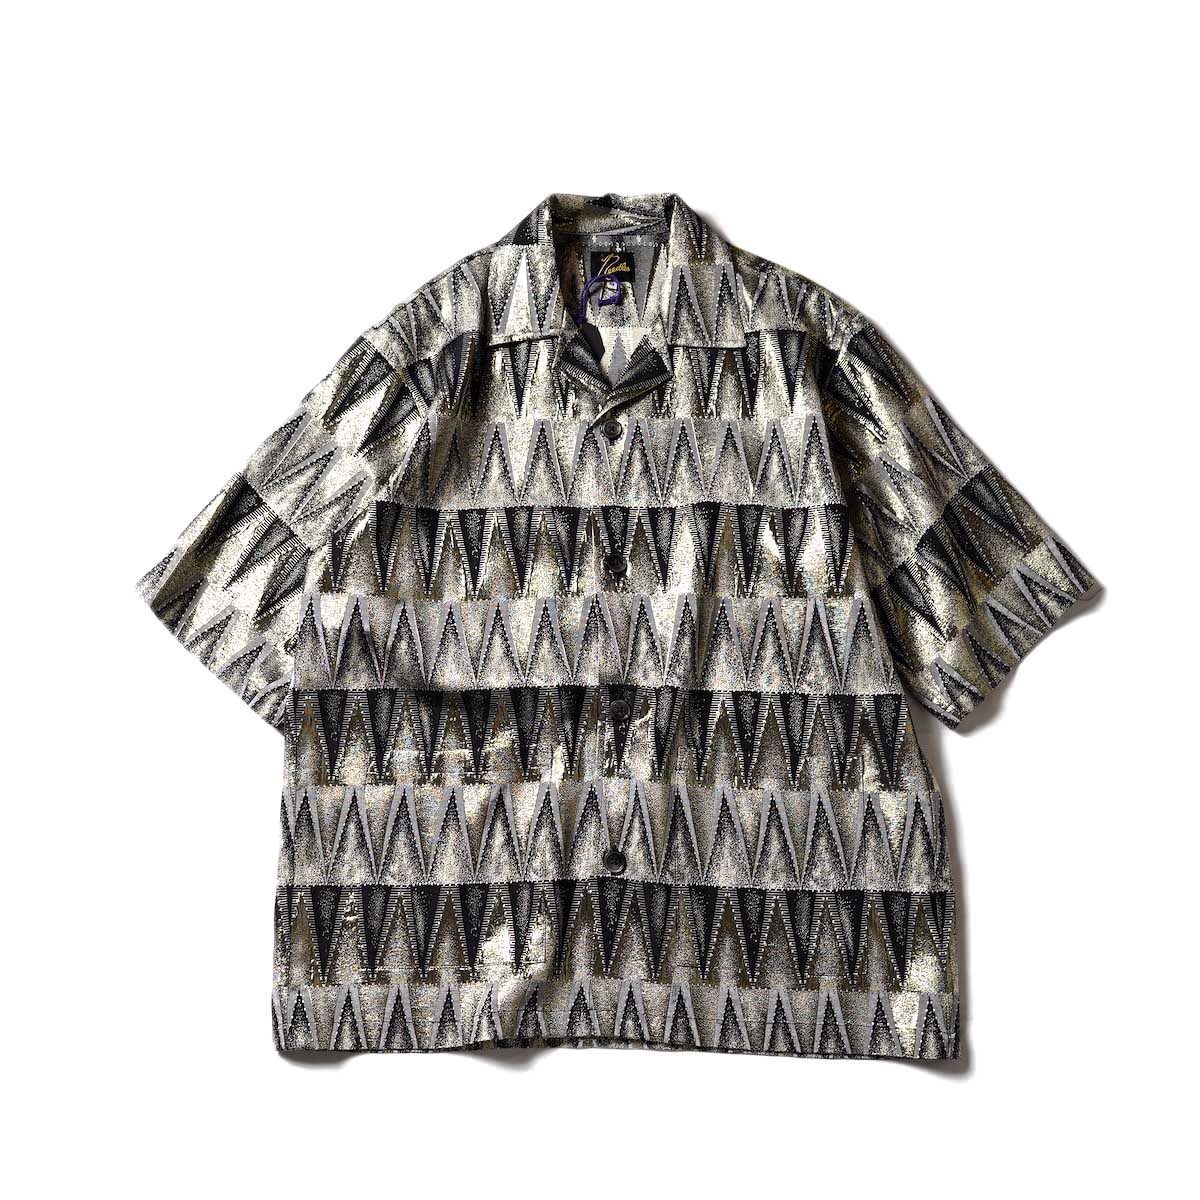 Needles / Cabana Shirt - Double Weave Jq. (Triangle)